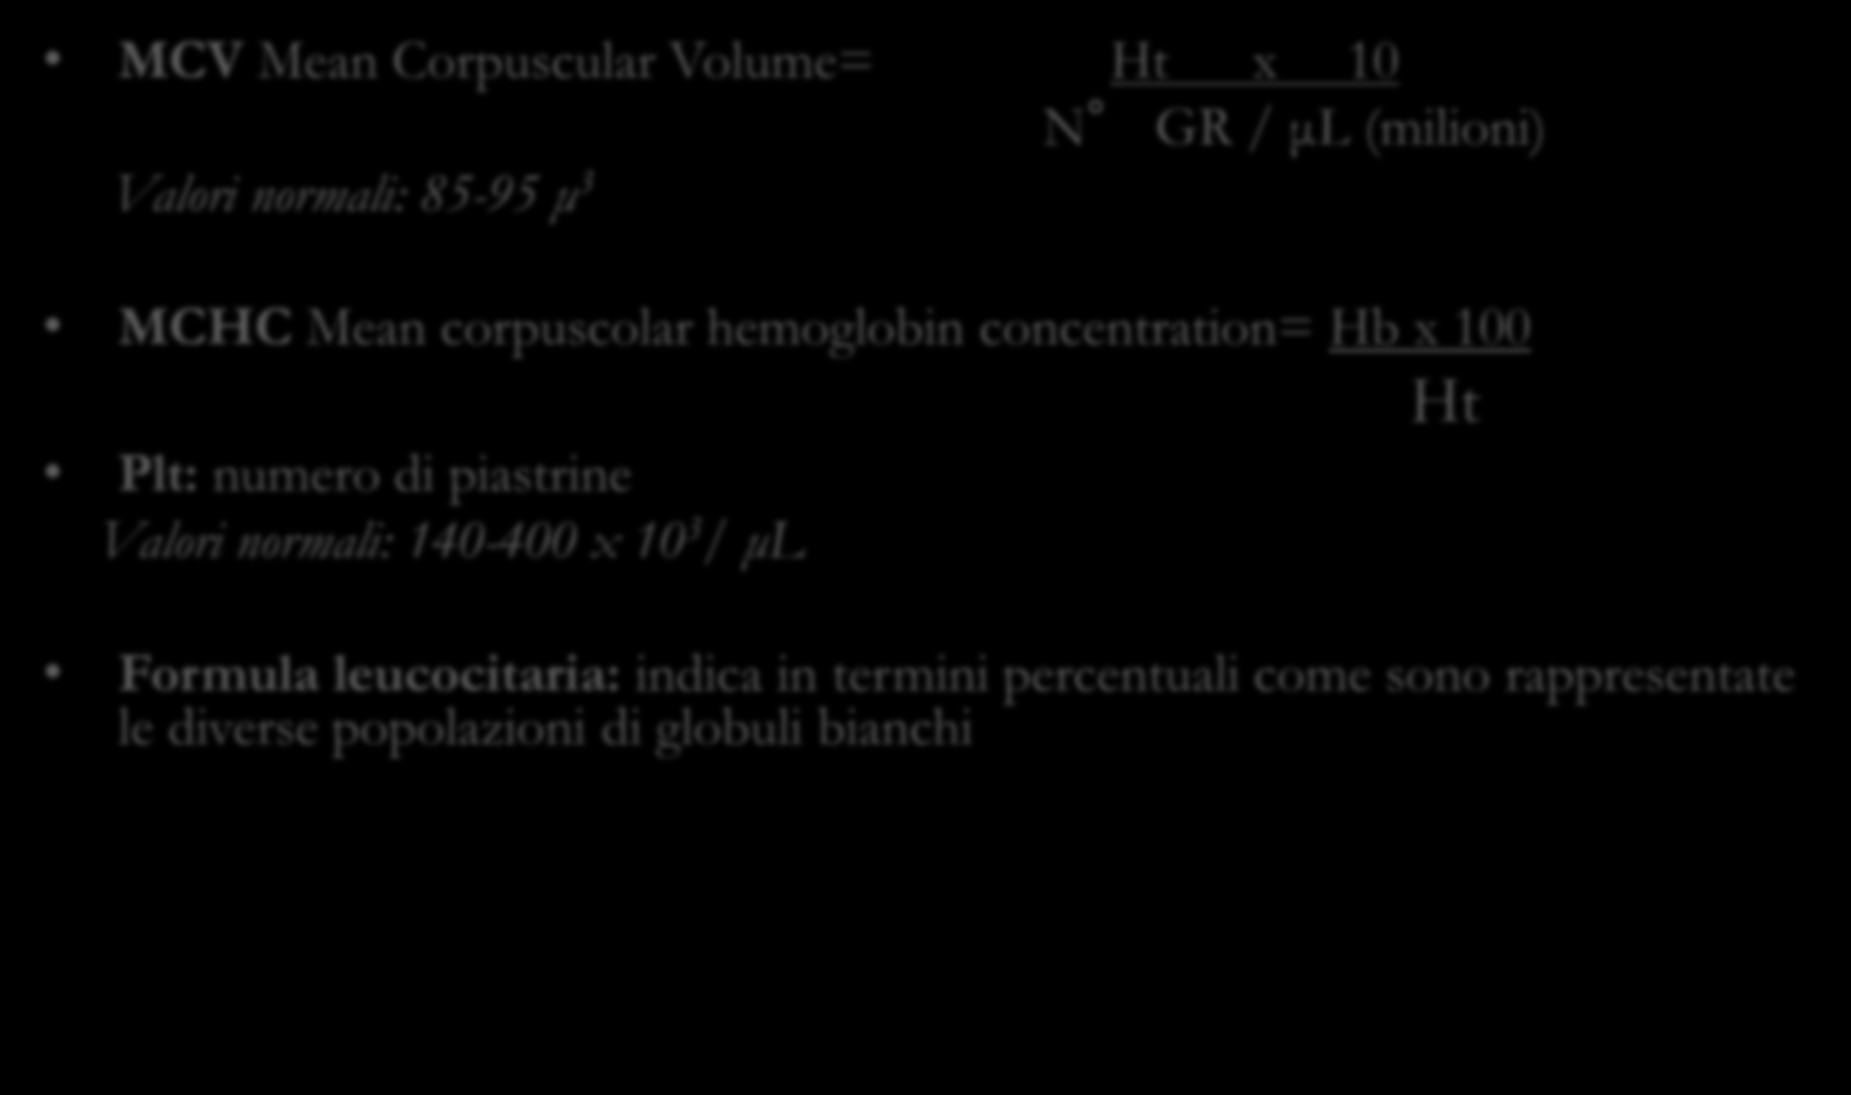 Esame emocromocitometrico MCV Mean Corpuscular Volume= Ht x 10 N GR / μl (milioni) Valori normali: 85-95 μ 3 MCHC Mean corpuscolar hemoglobin concentration= Hb x 100 Ht Plt: